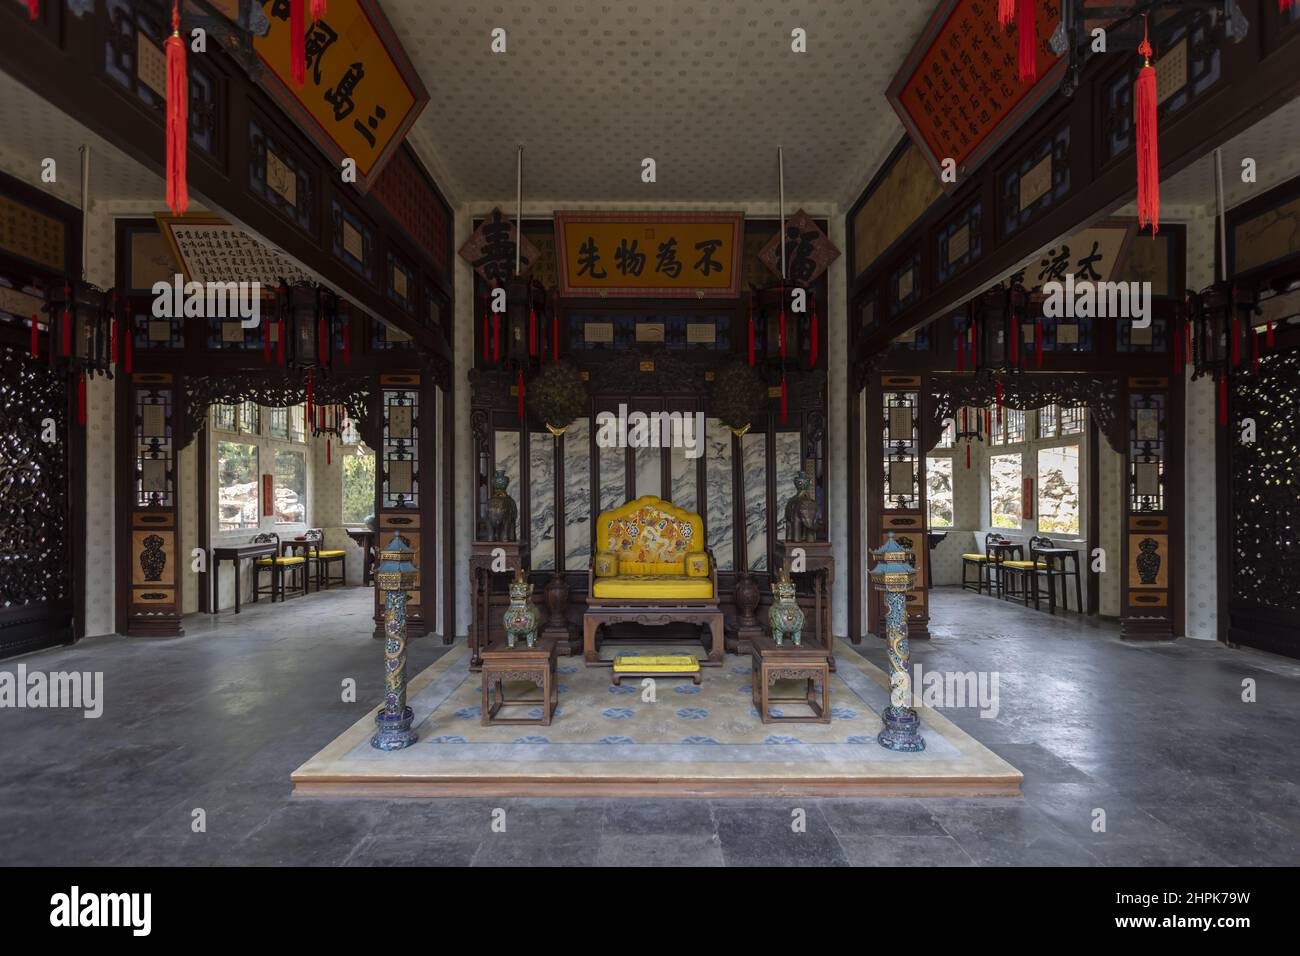 Beijing beihai park - meditation zhai interior Stock Photo